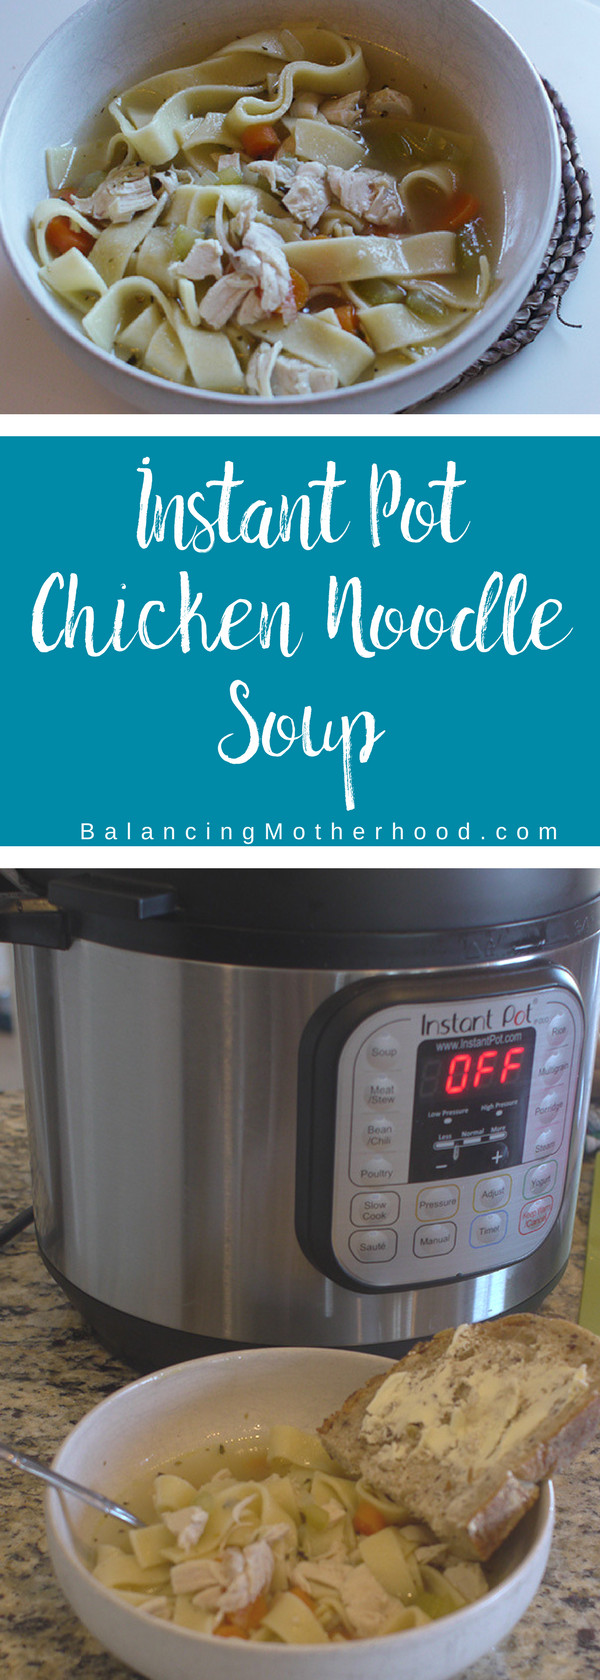 Instant Pot Chicken Soup With Frozen Chicken
 Easy to make Instant Pot chicken noodle soup with frozen